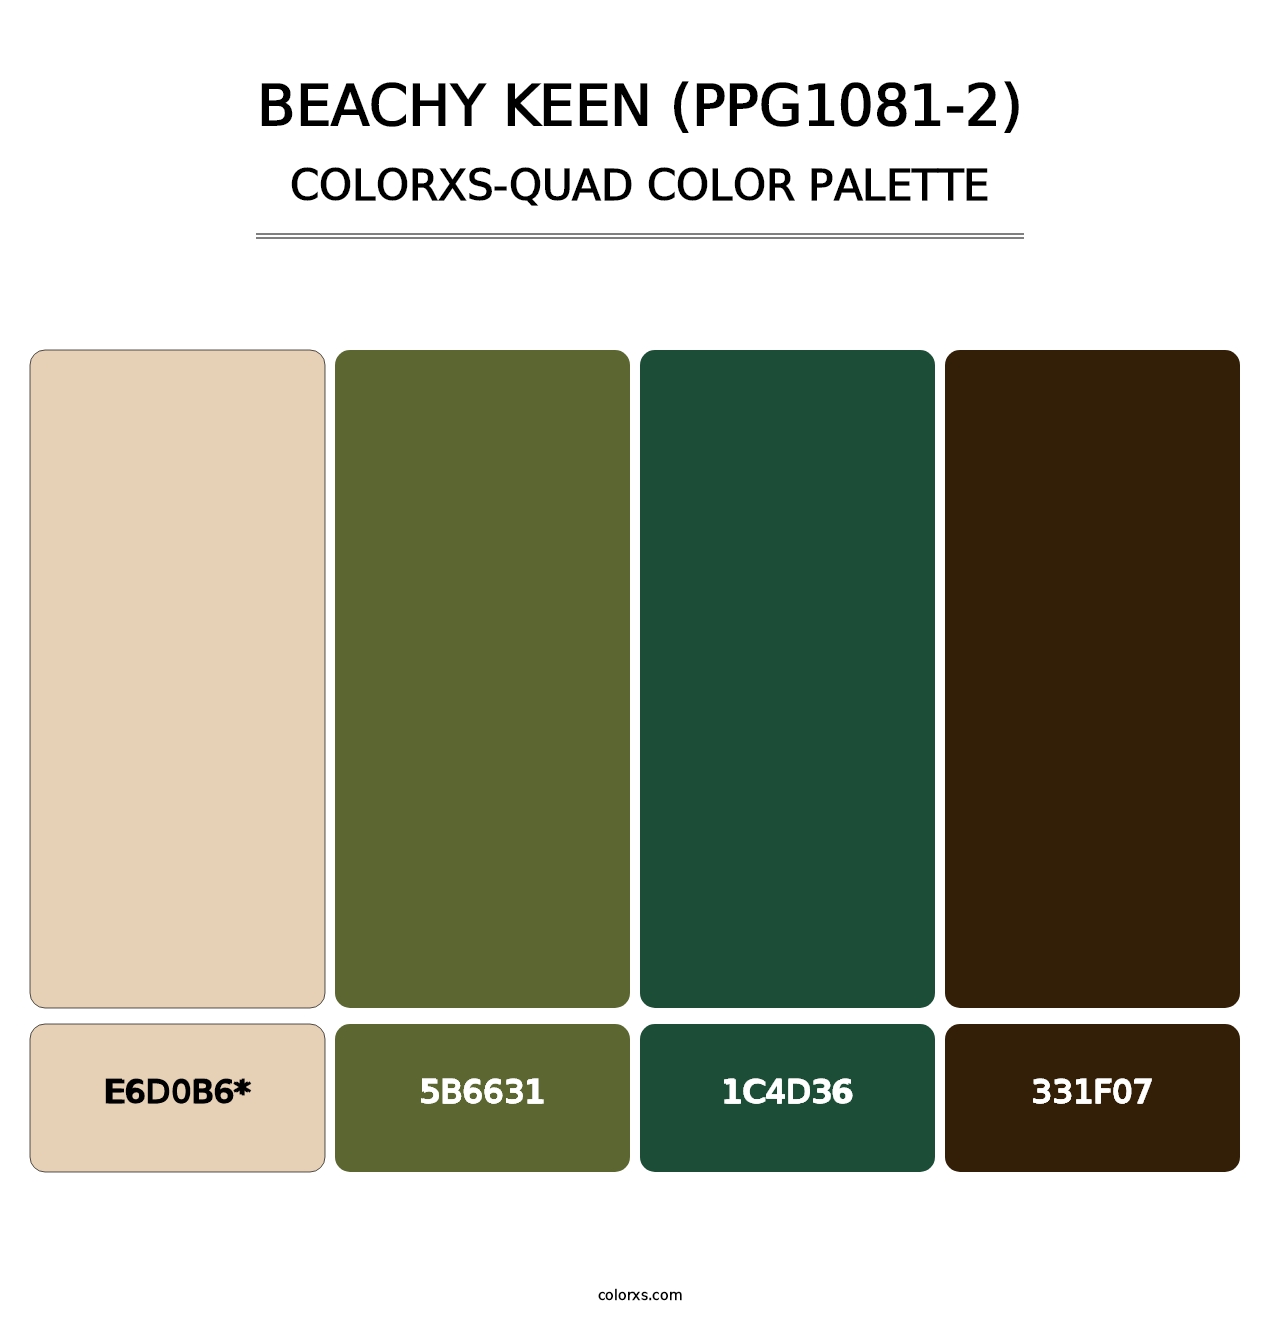 Beachy Keen (PPG1081-2) - Colorxs Quad Palette